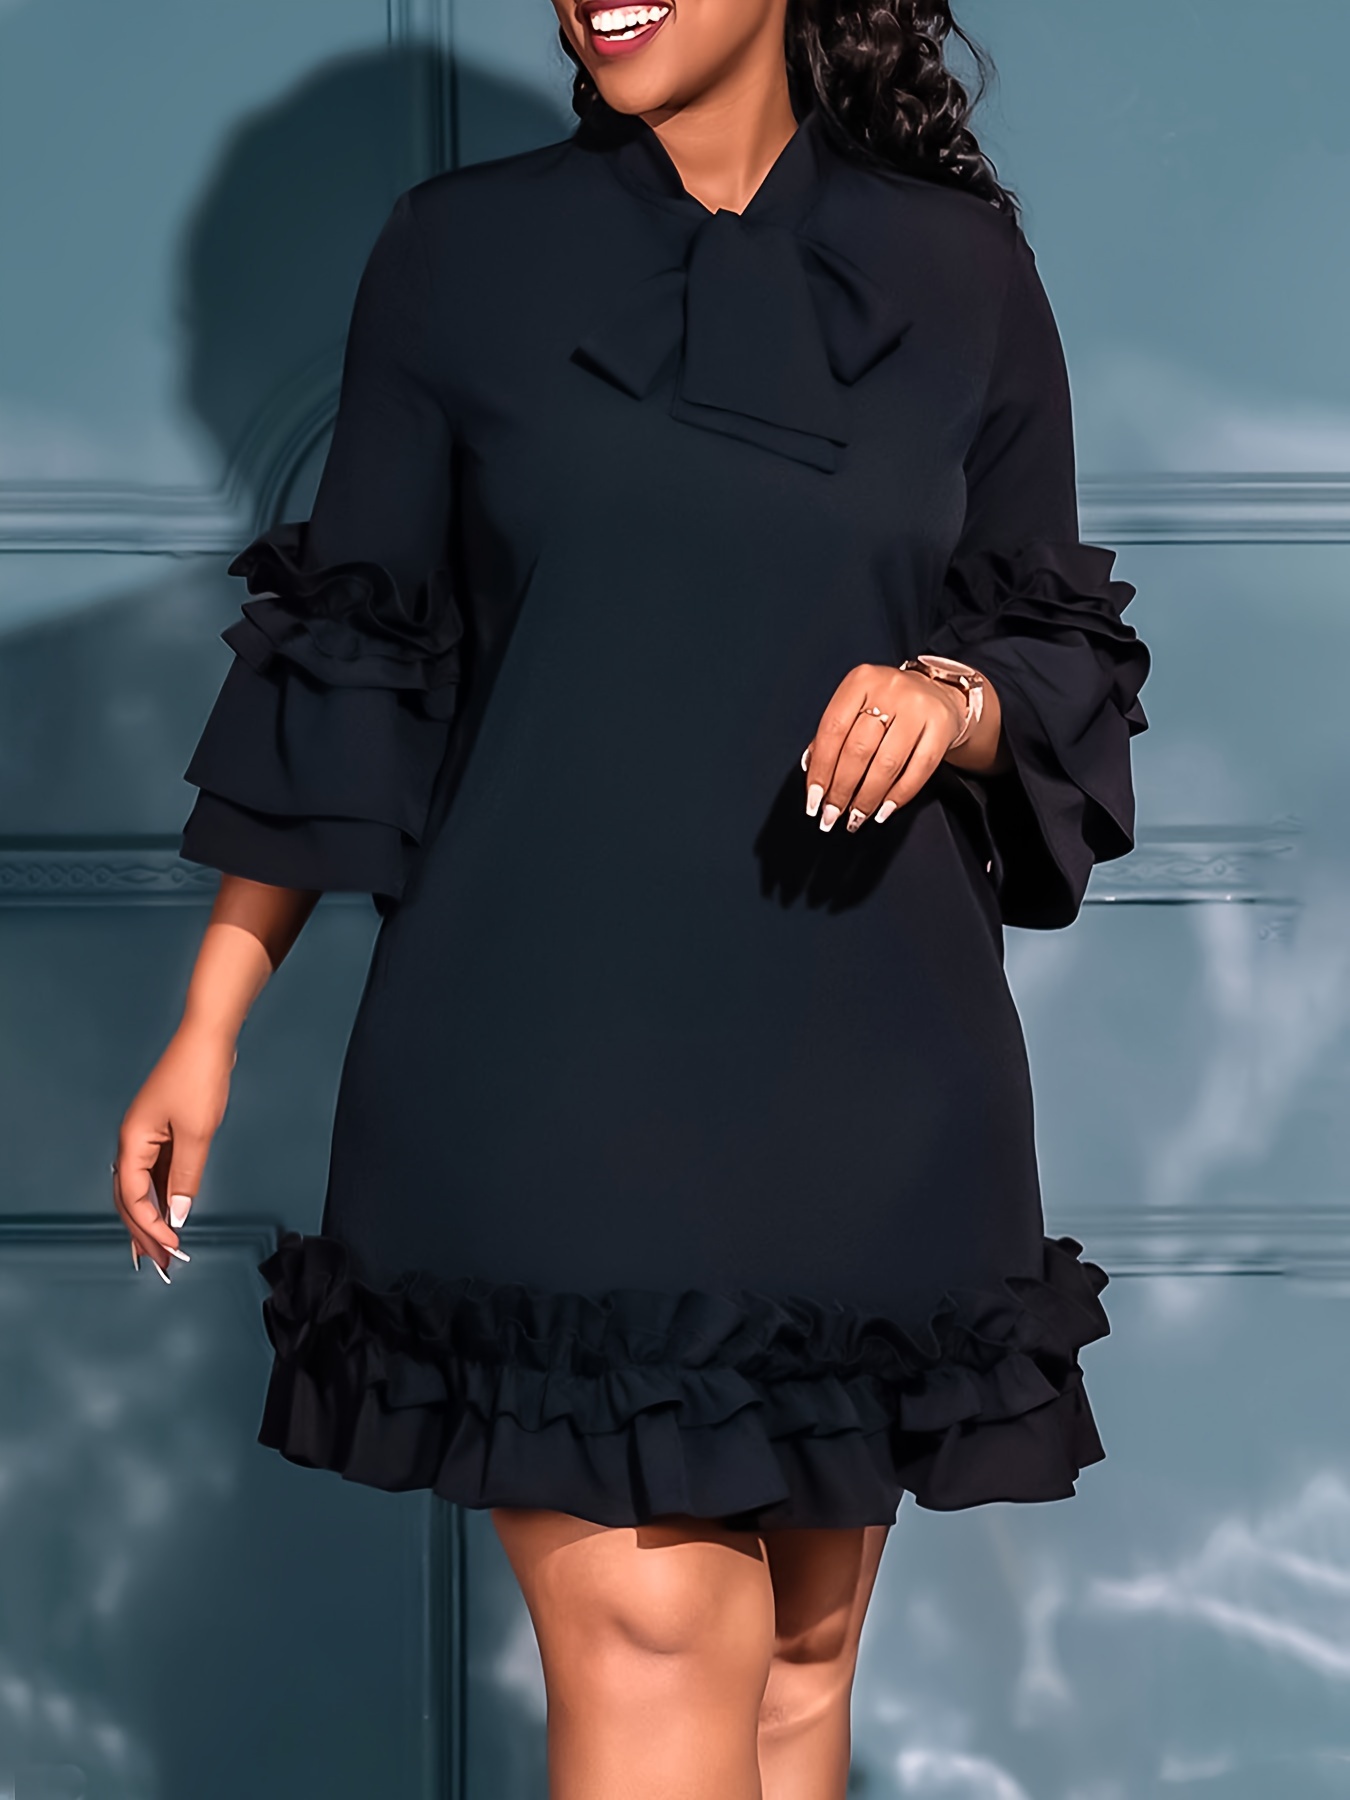 Plus Size Dress, Elegant Black Dress, Trendy Plus Size Clothing